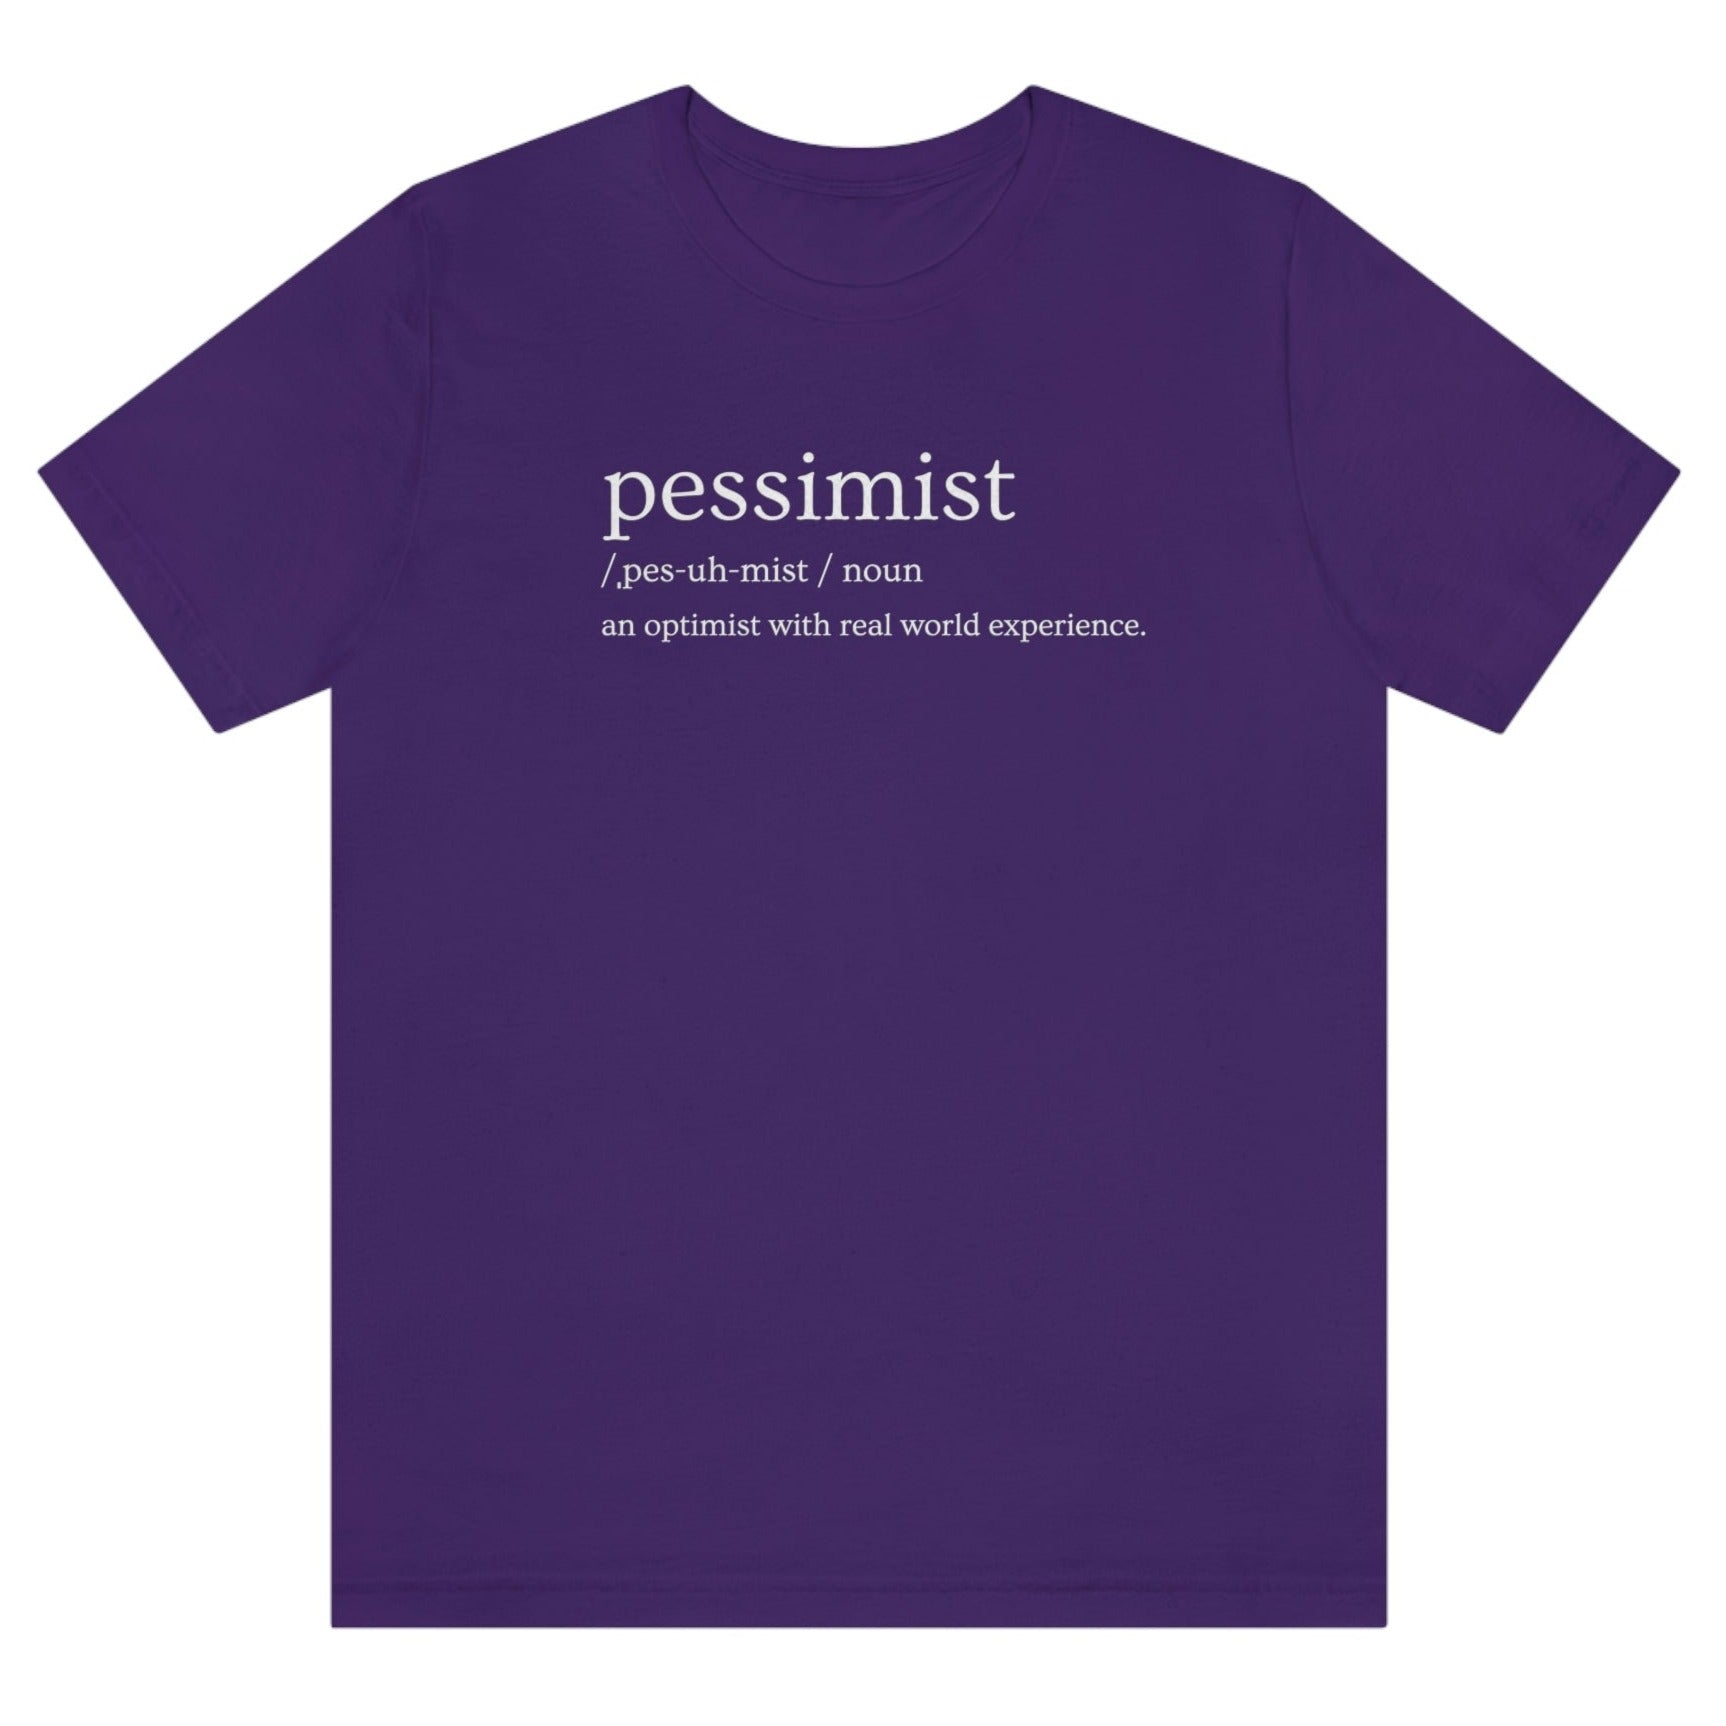 pessimist-an-optimist-with-real-world-experience-team-purple-t-shirt